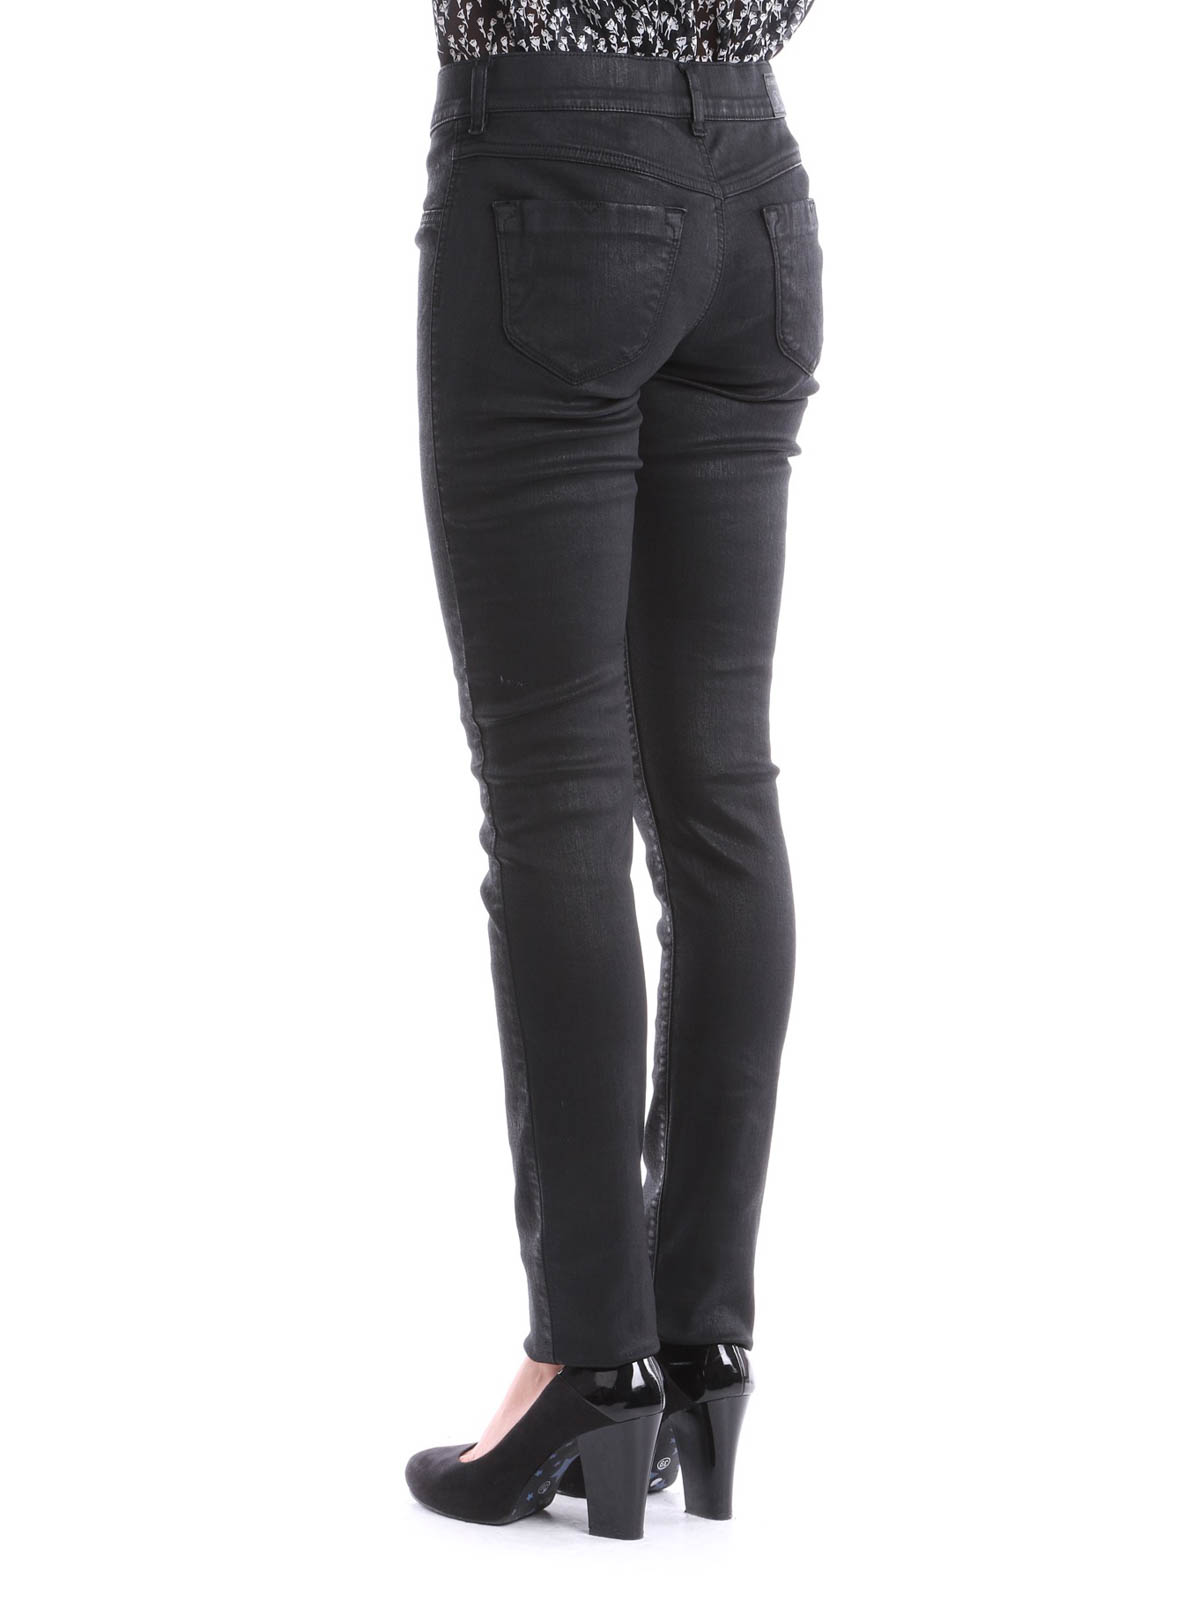 Vormen karton Vaarwel Bootcut jeans Diesel - Low waist stretchy Livier jeans - 0CQLP0838W01